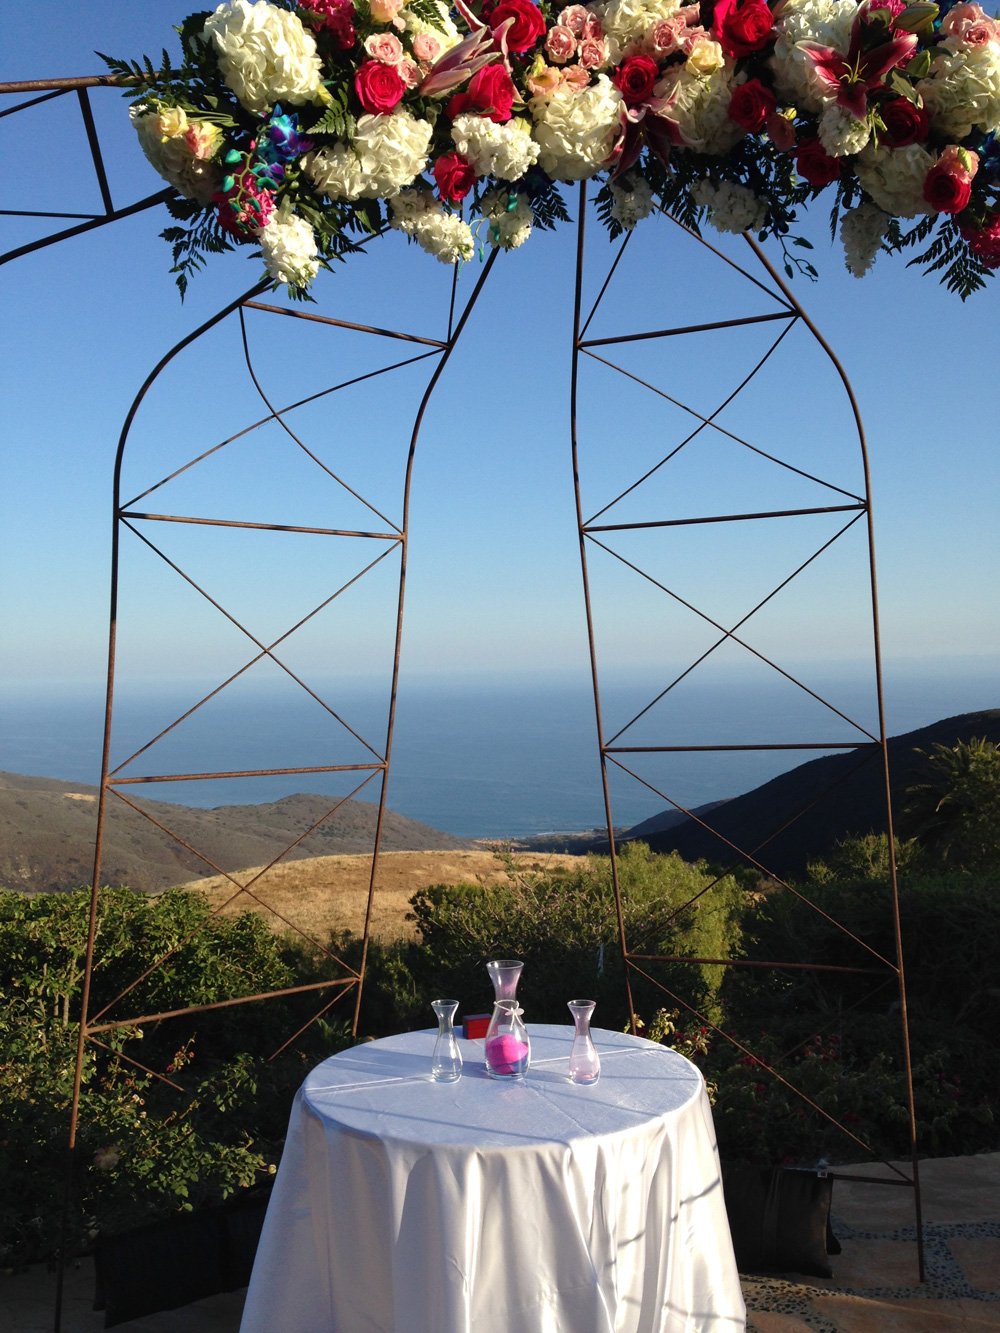 Wedding site for Nurpesh and Jenna, Rancho Sol Del Pacifico, Malibu